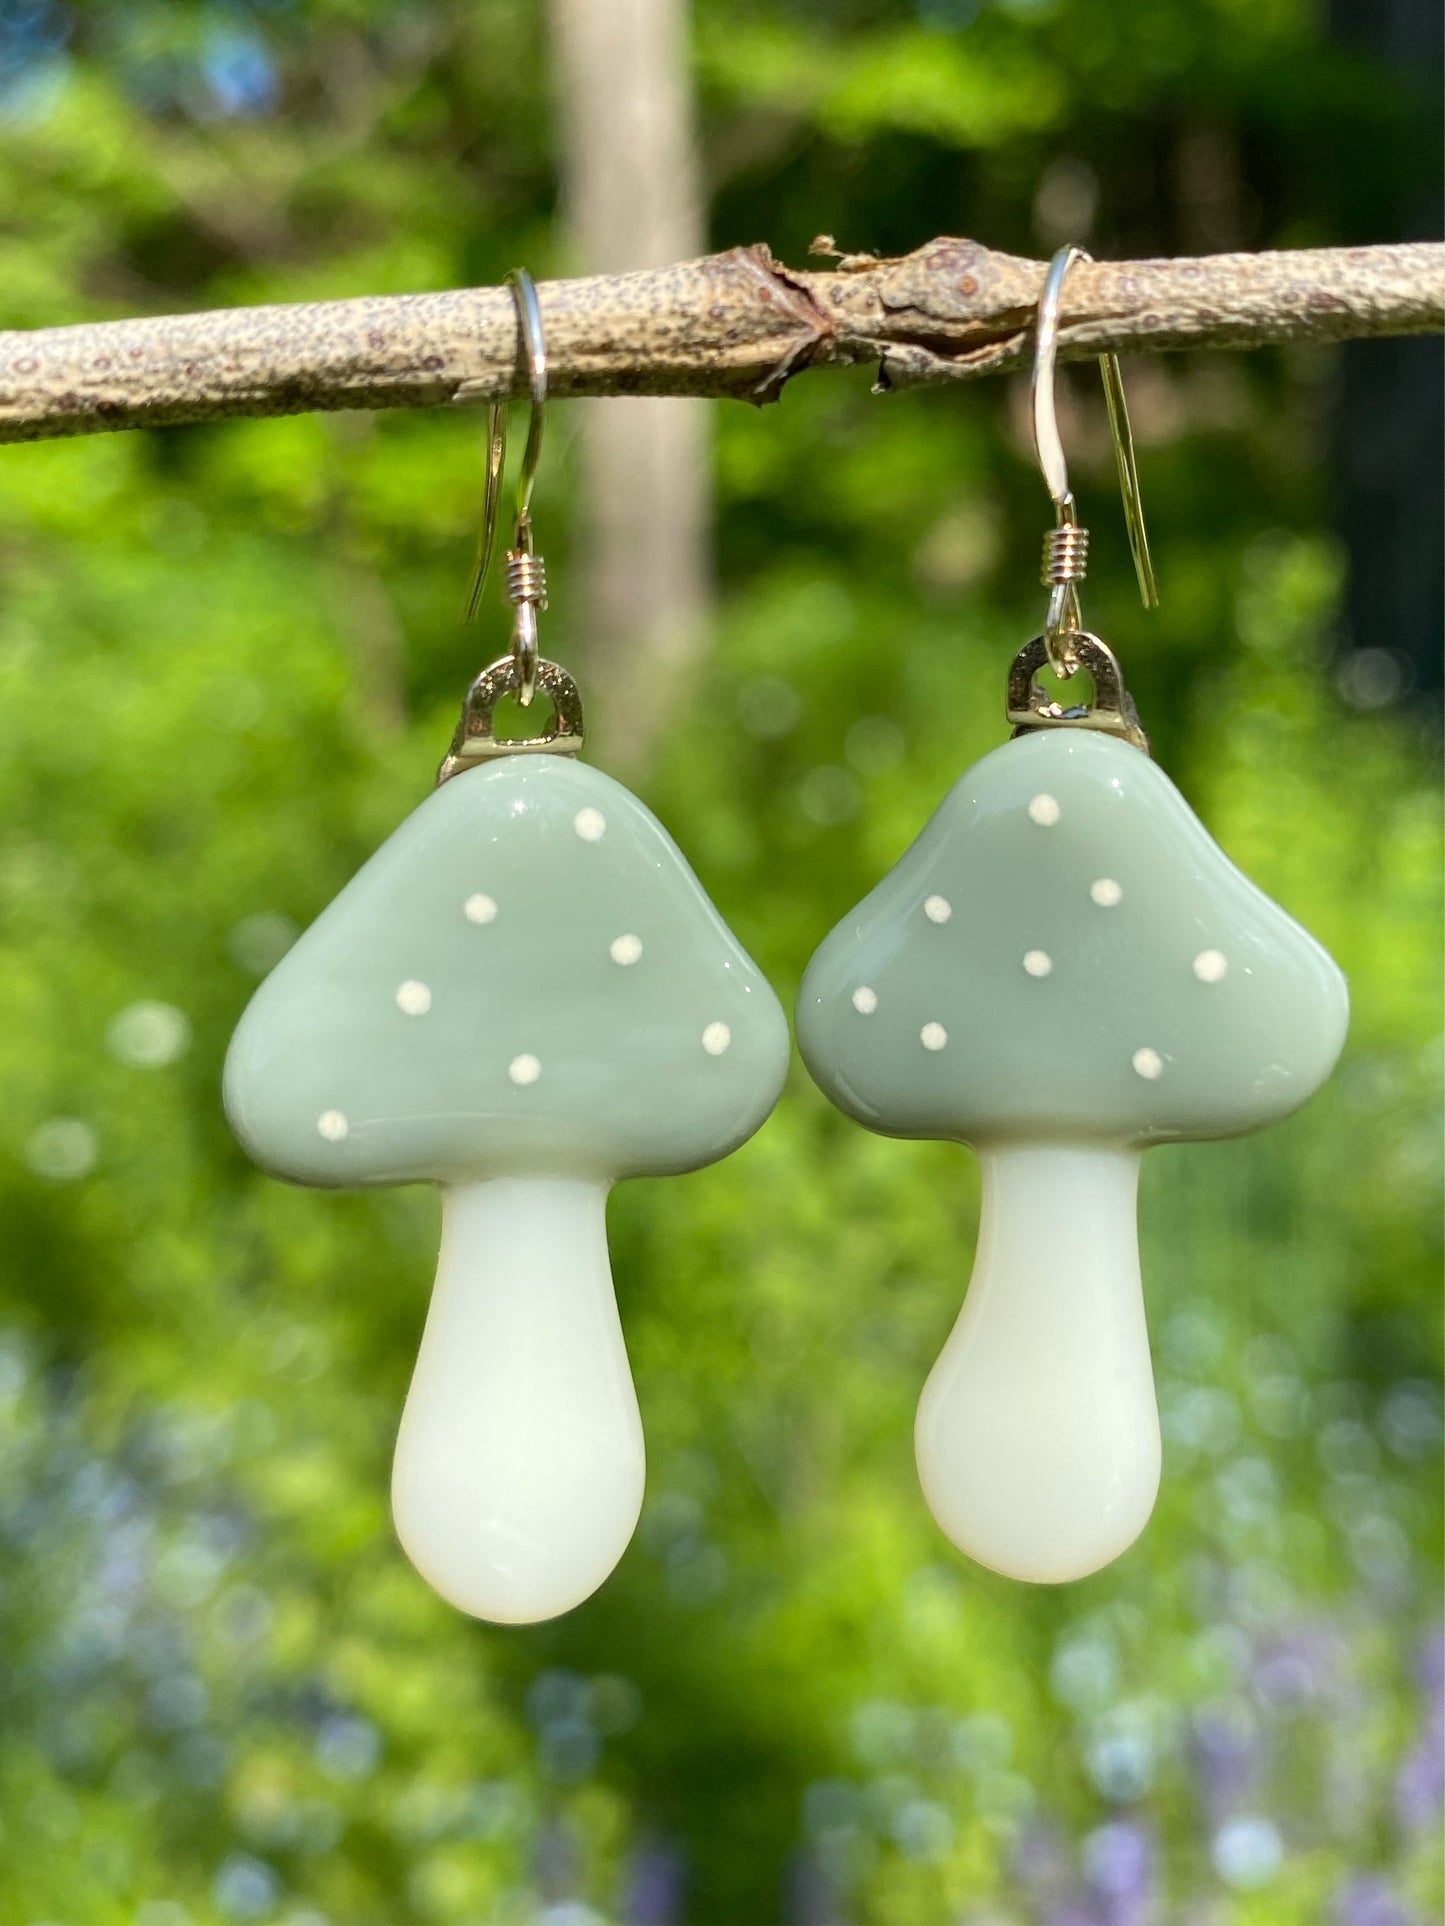 Groovy Mushroom Earrings